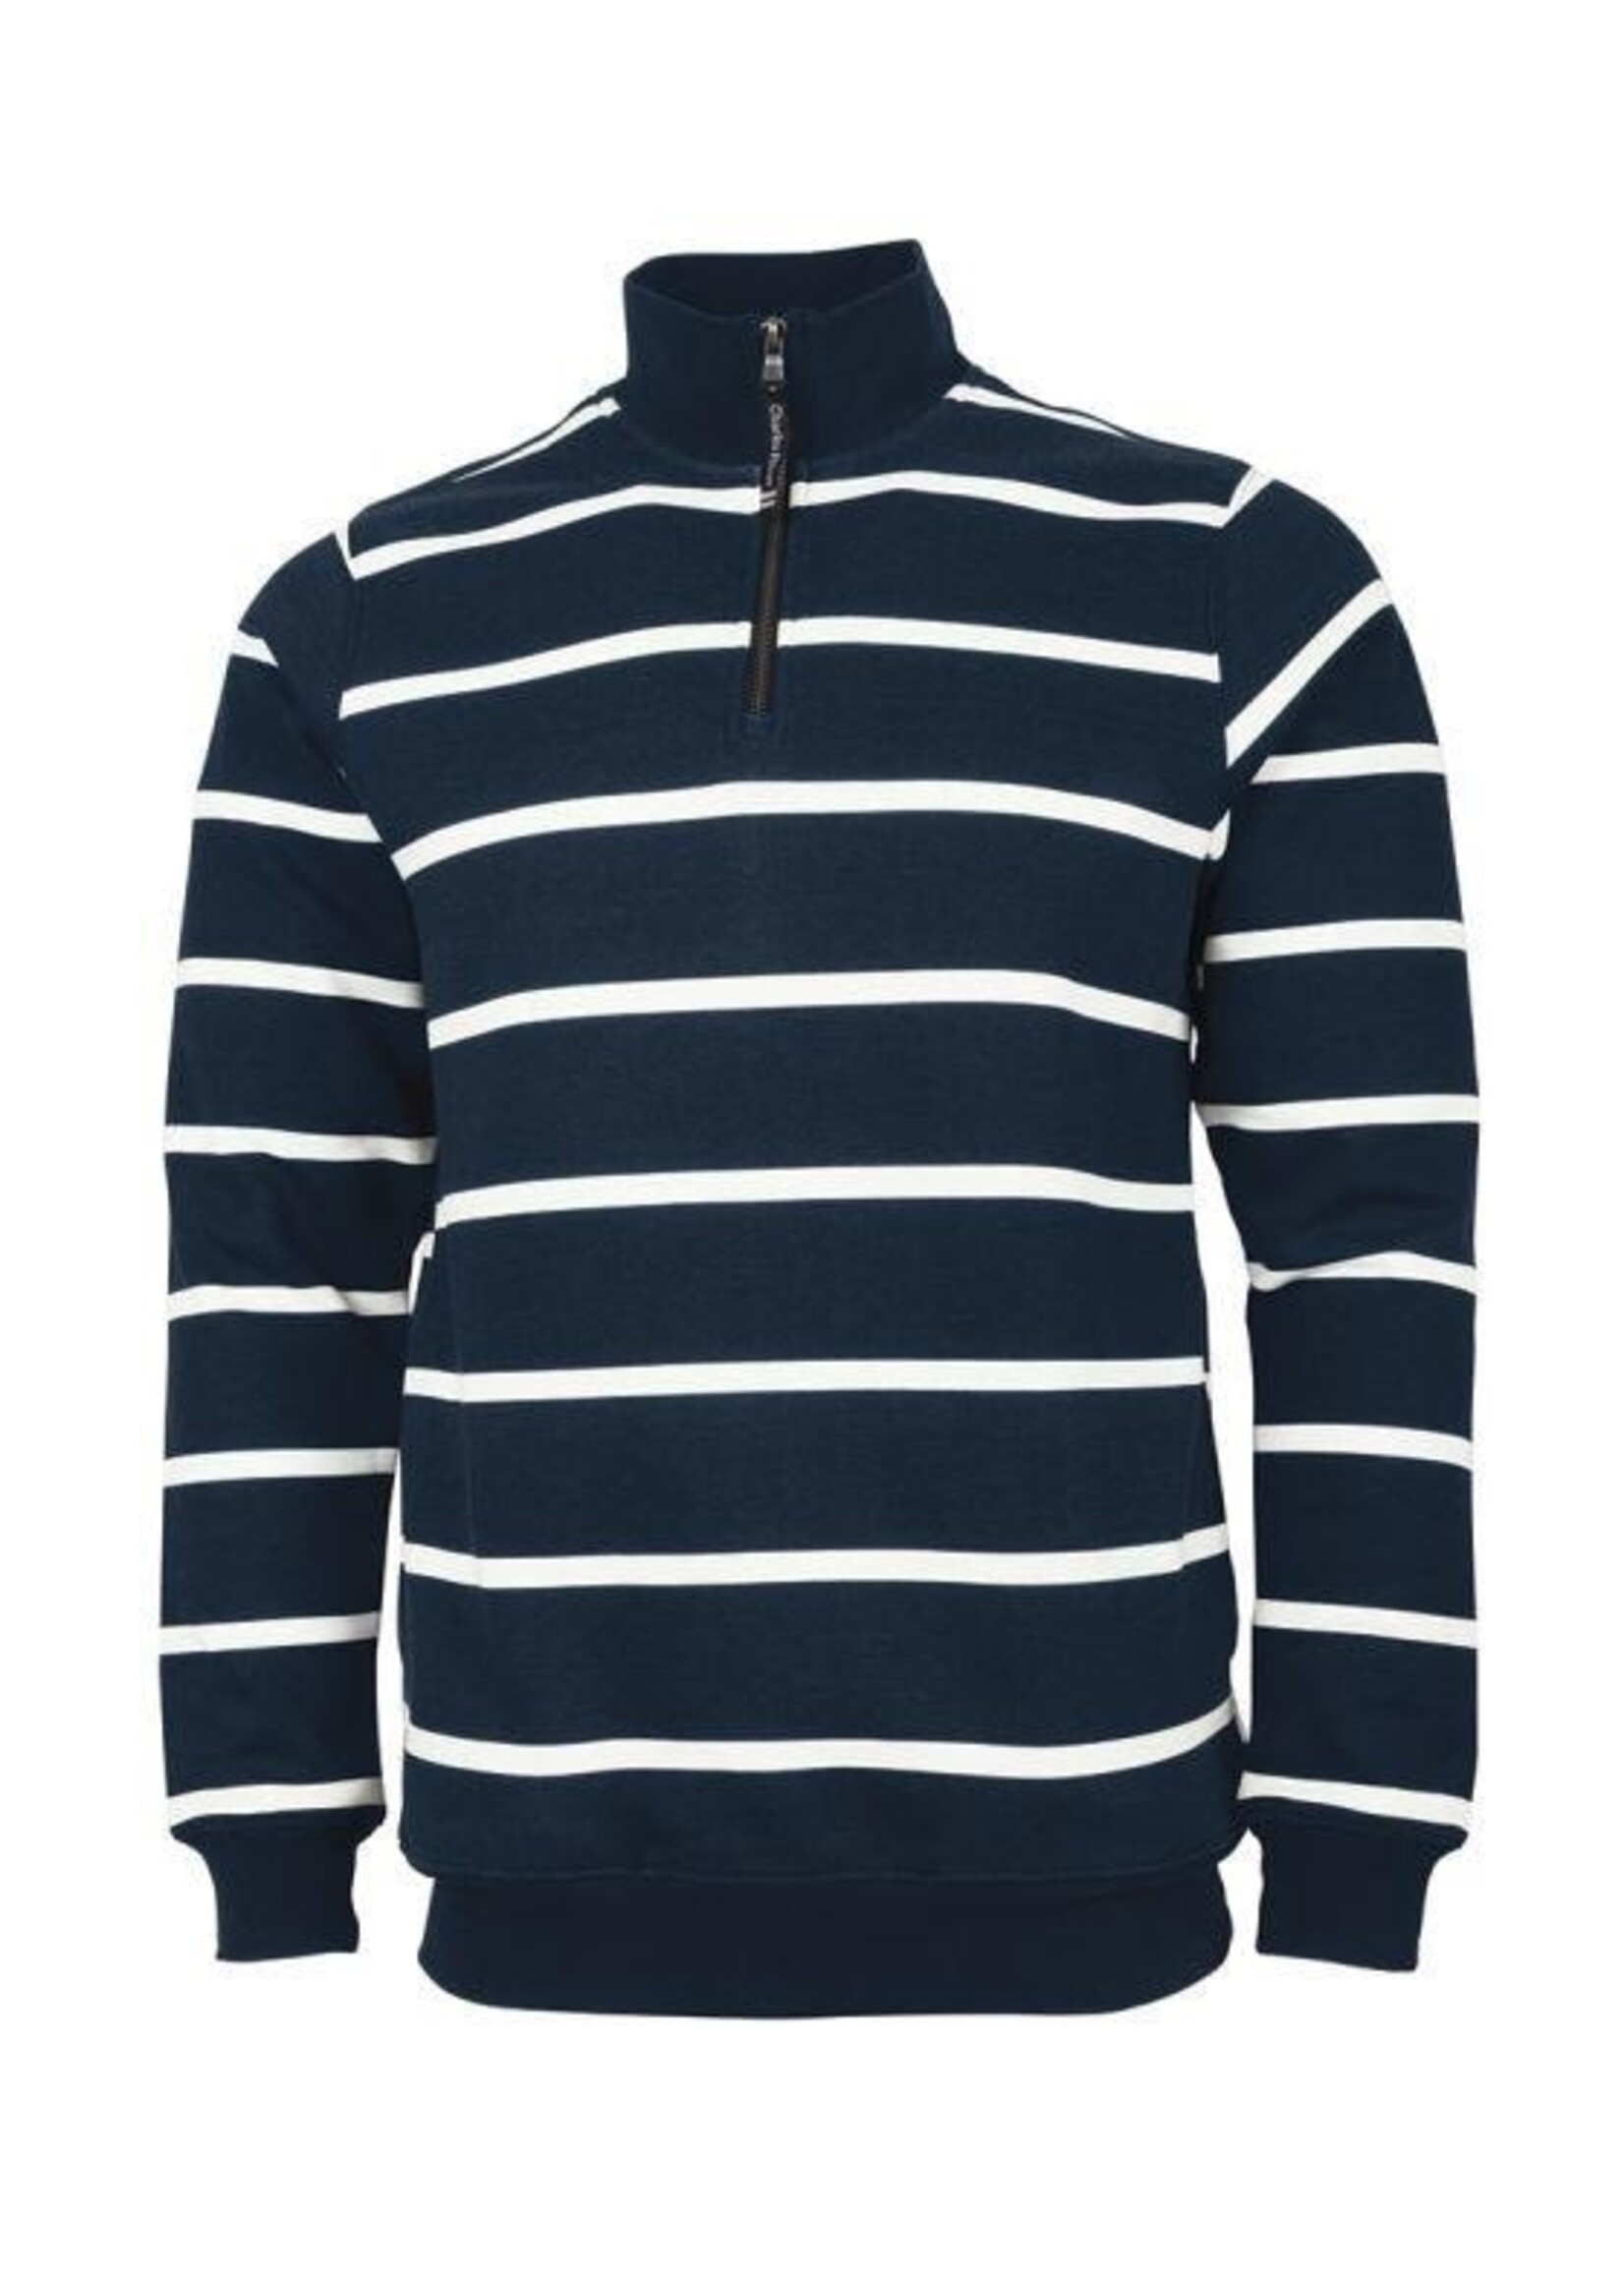 NON-UNIFORM Stripe 1/4 Zip Pullover Sweatshirt